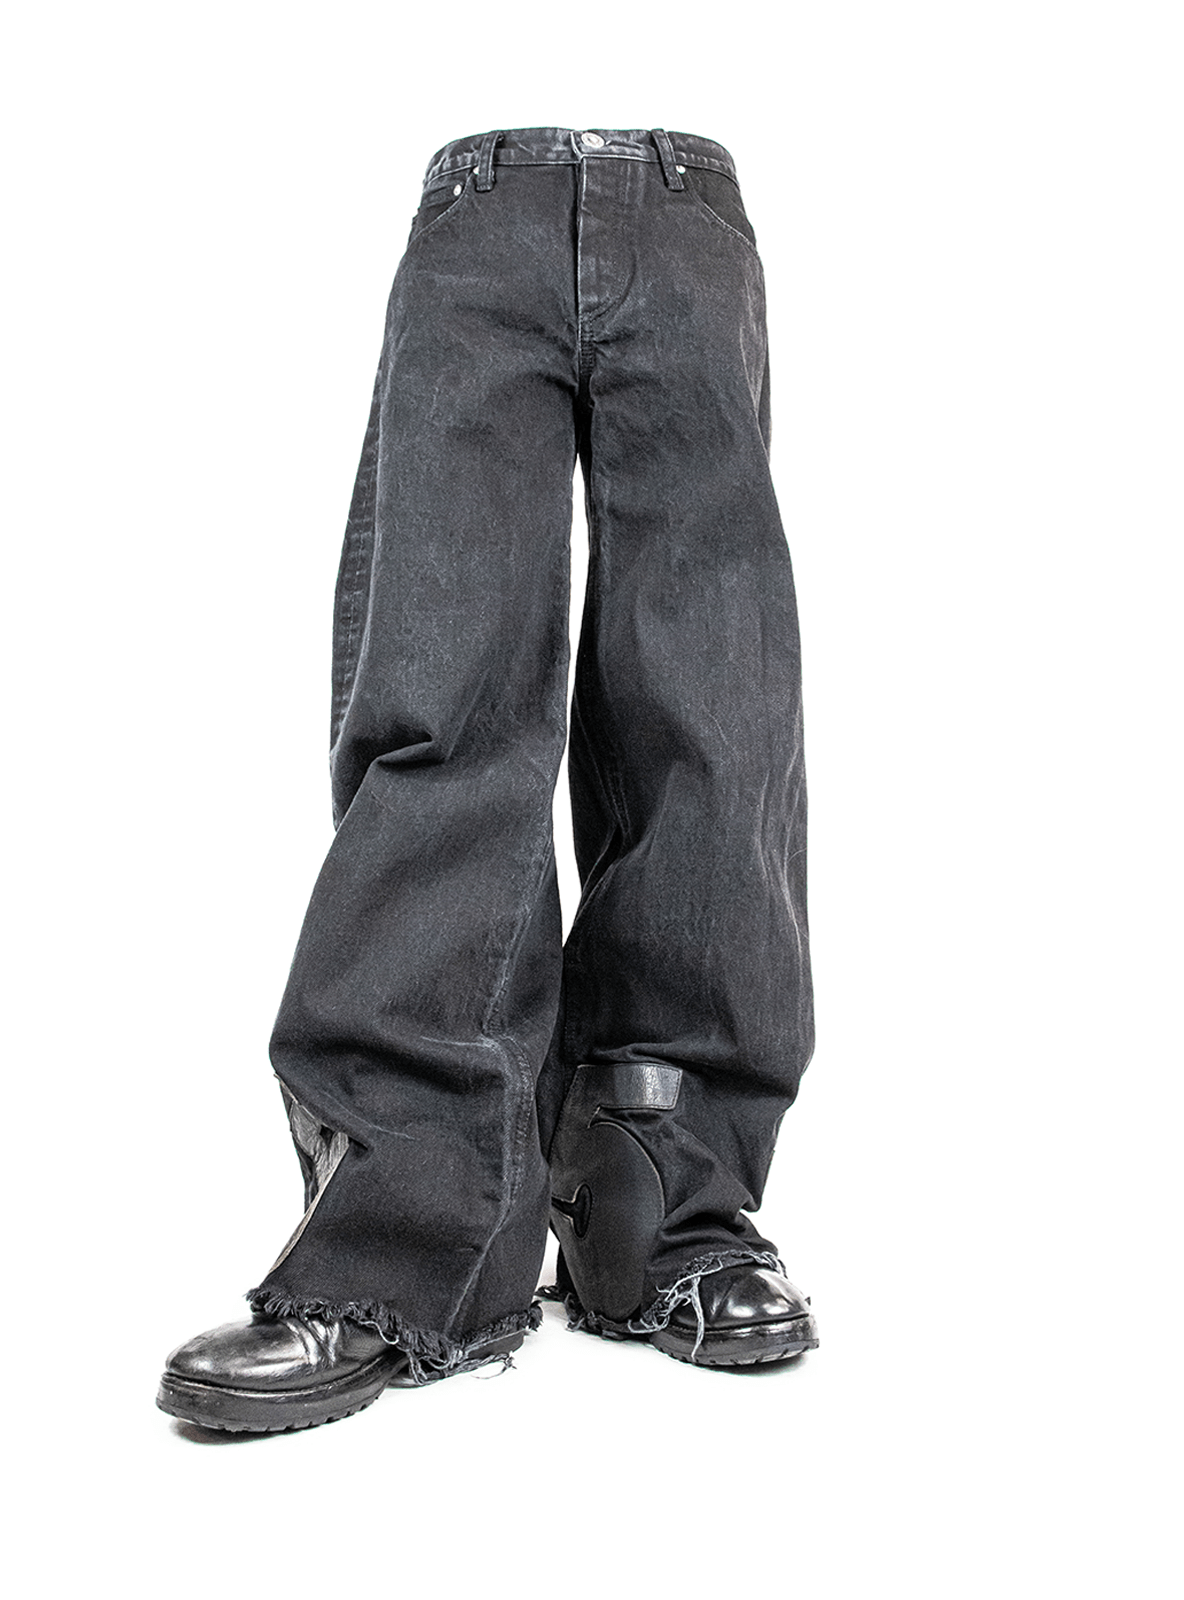 QBO Men's Vintage Graffiti Hip Hop Style Baggy Jeans Denim-30 Black at   Men's Clothing store